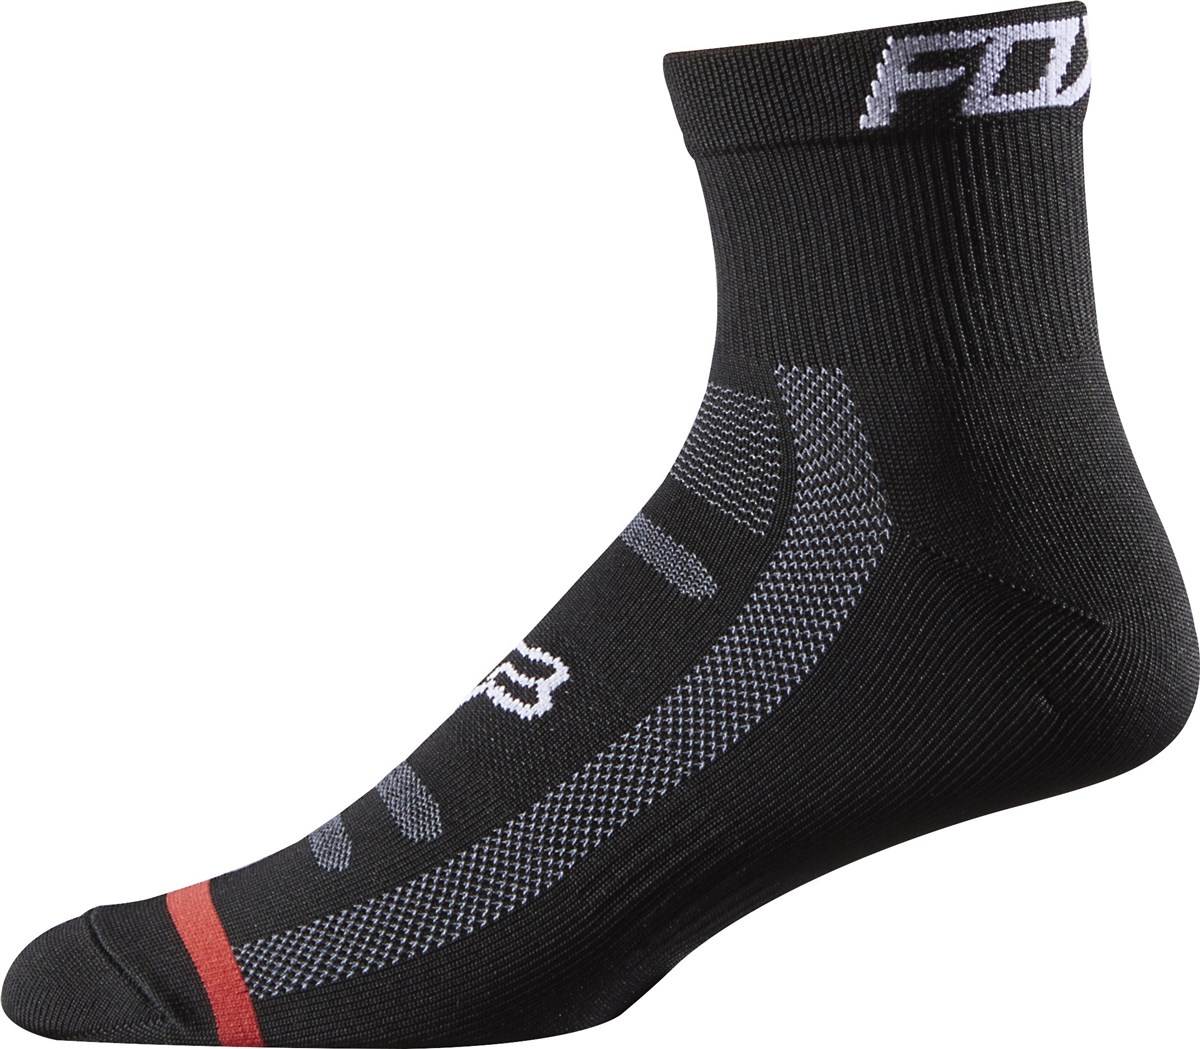 Fox Clothing Trail Cycling Socks 4 Inch AW16